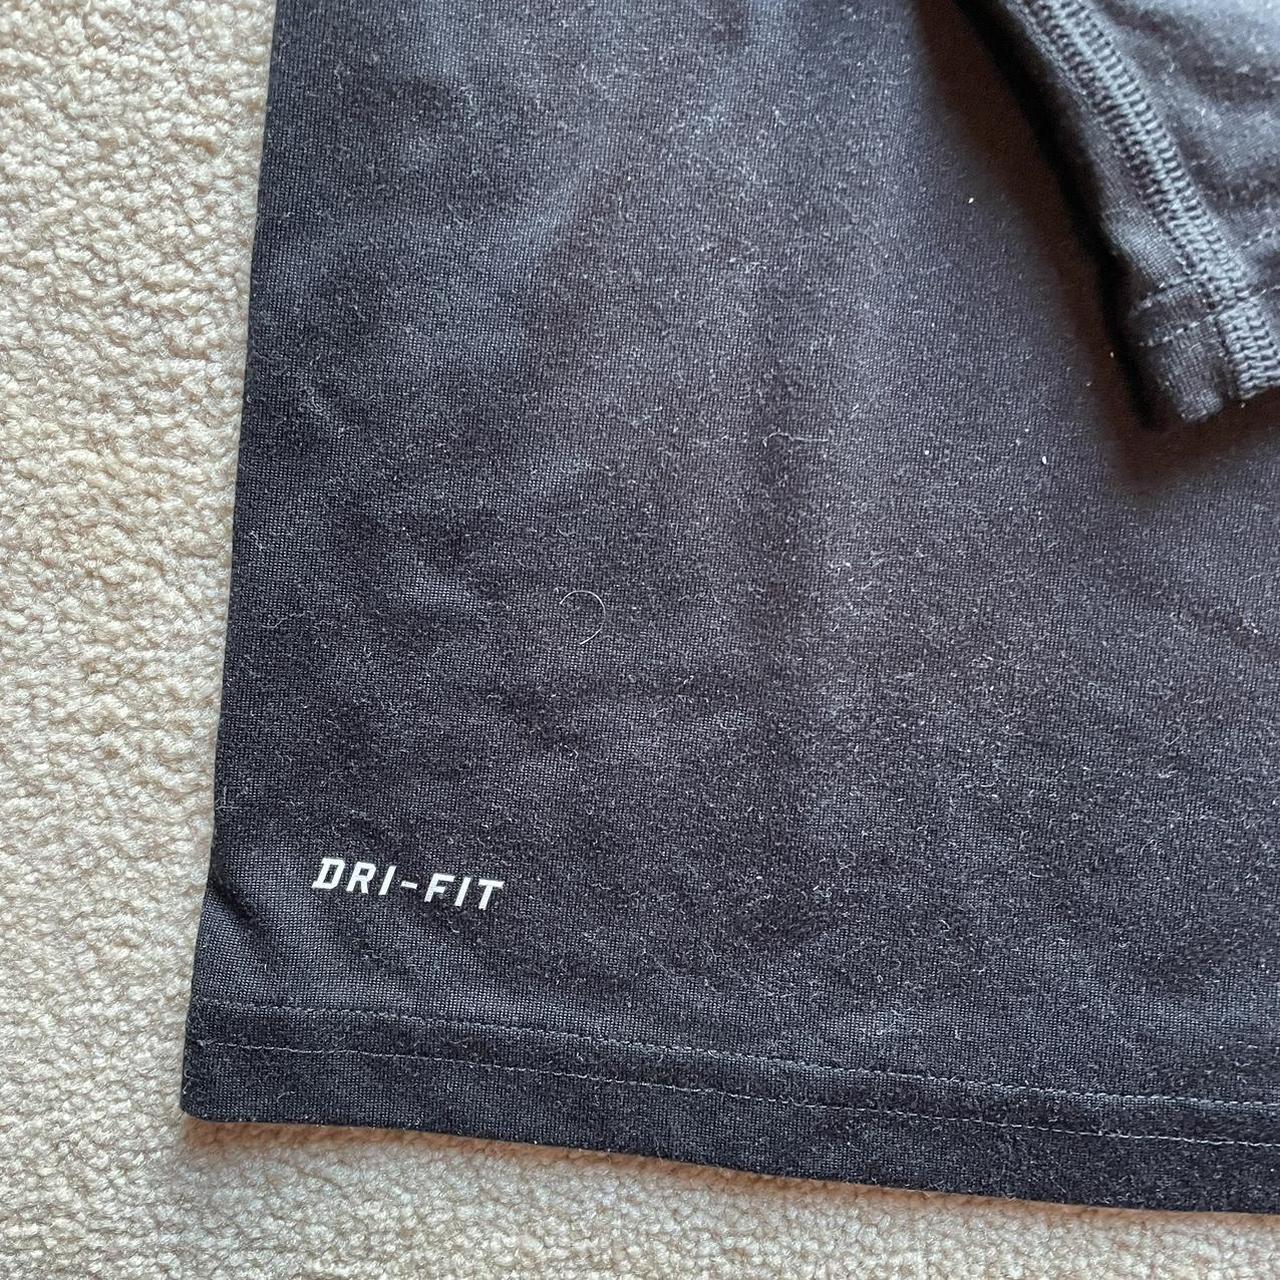 Nike Dri-Fit Legend Long Sleeve T-Shirt Worn gently,... - Depop